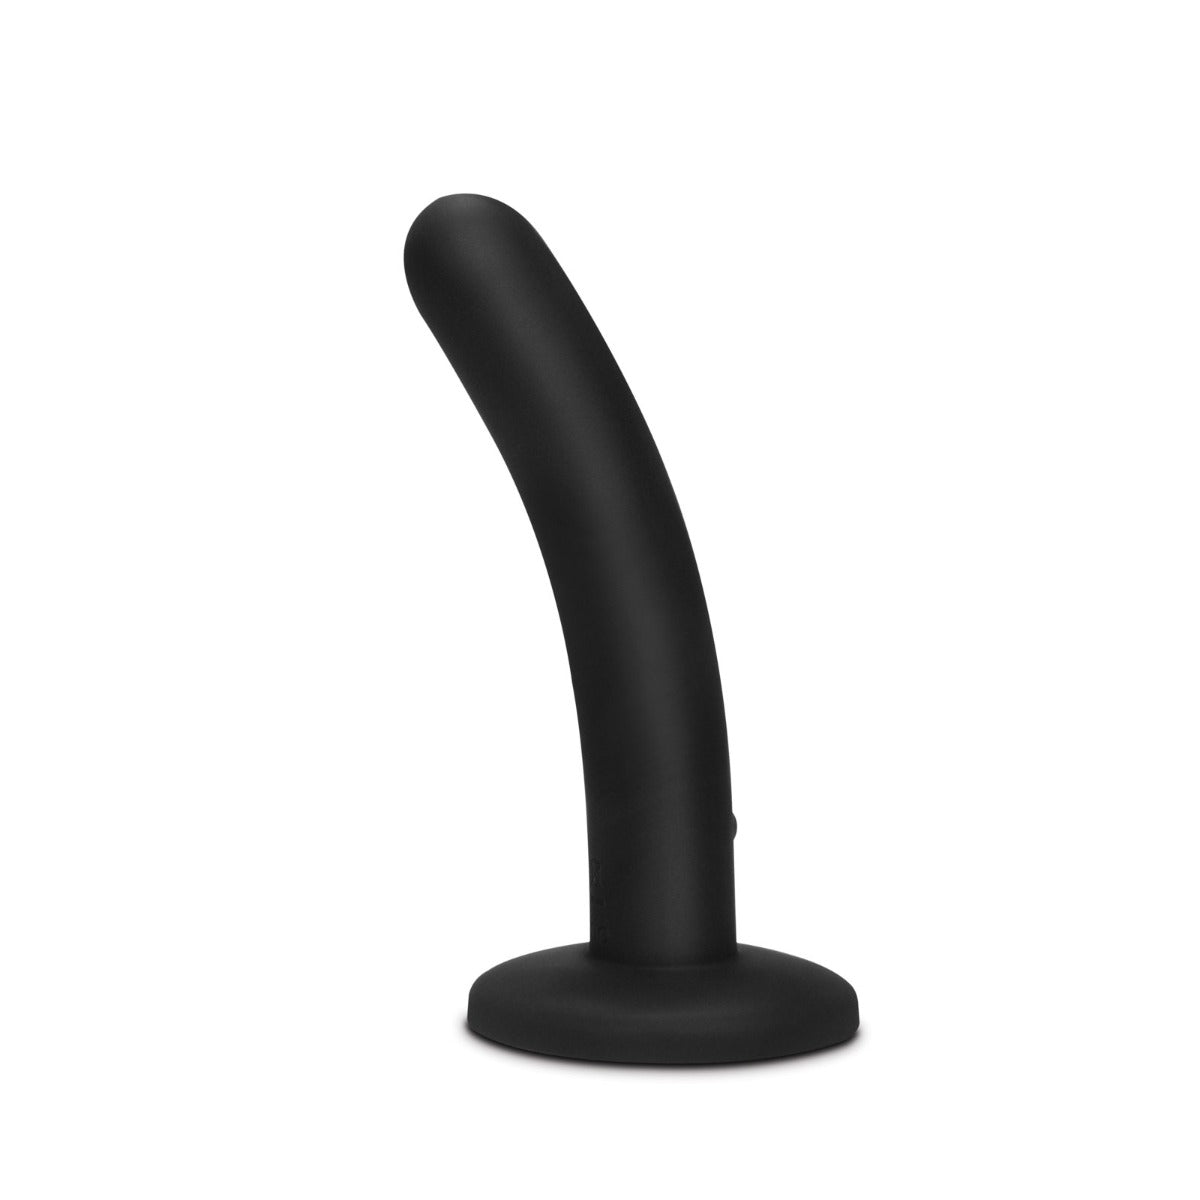  Whipsmart 5 inch Rechargeable Slimline Vibrating Dildo - Black    | Awaken My Sexuality